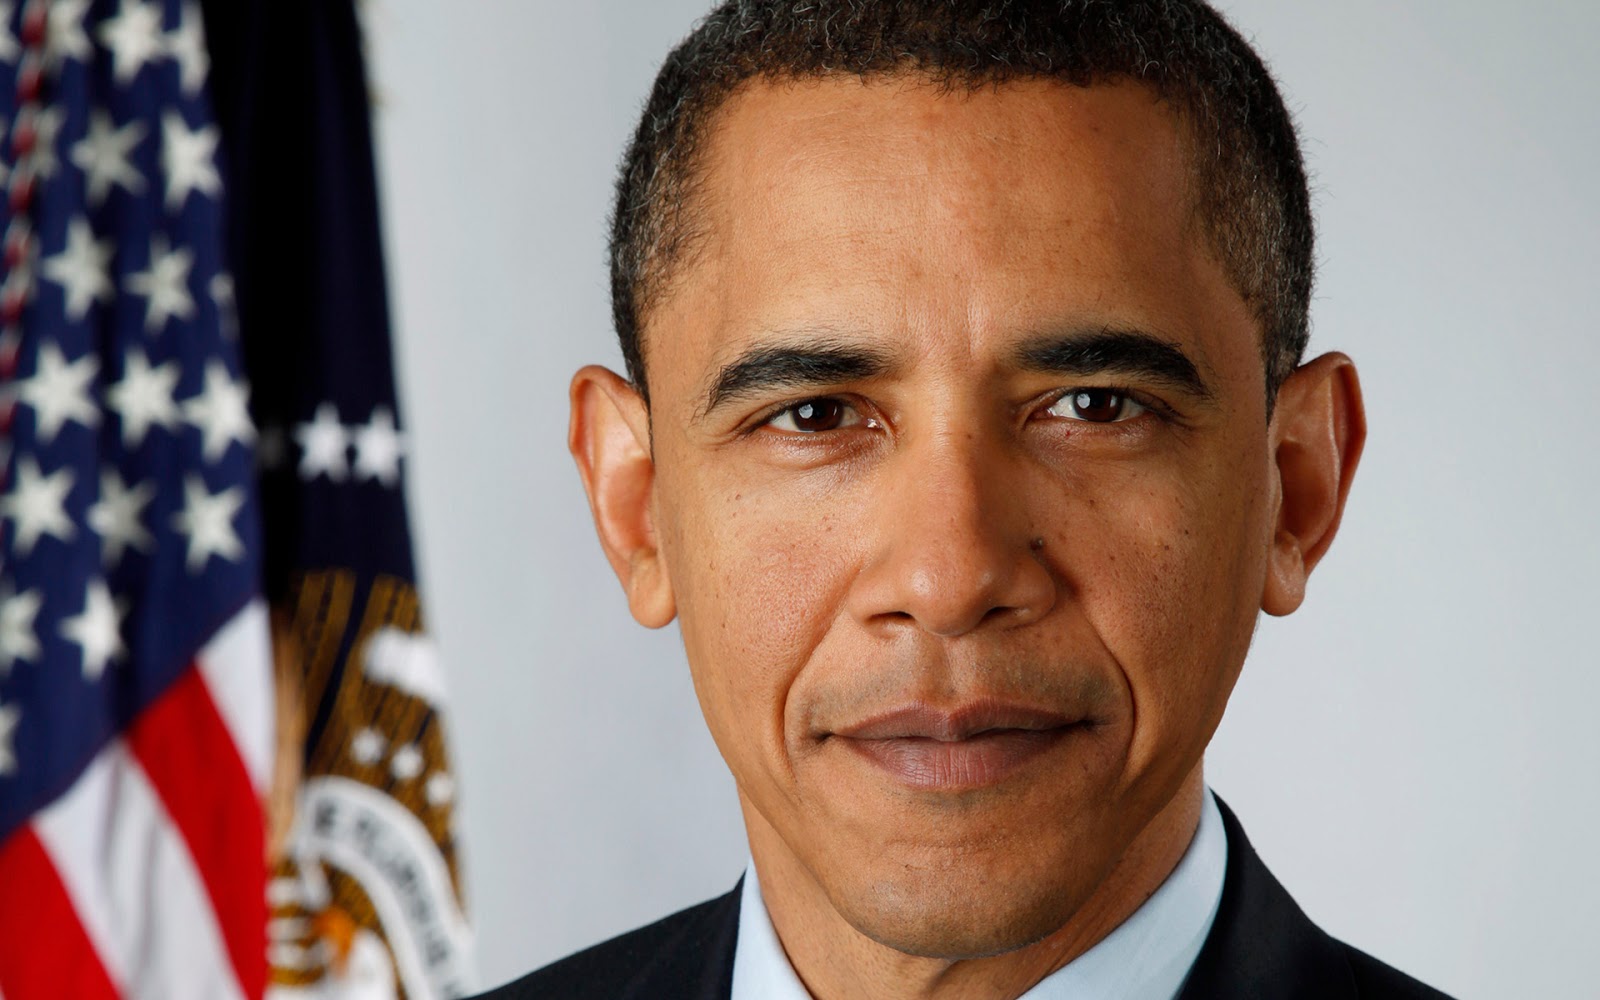 President Barack Obama HD Image Photos Wallpaper